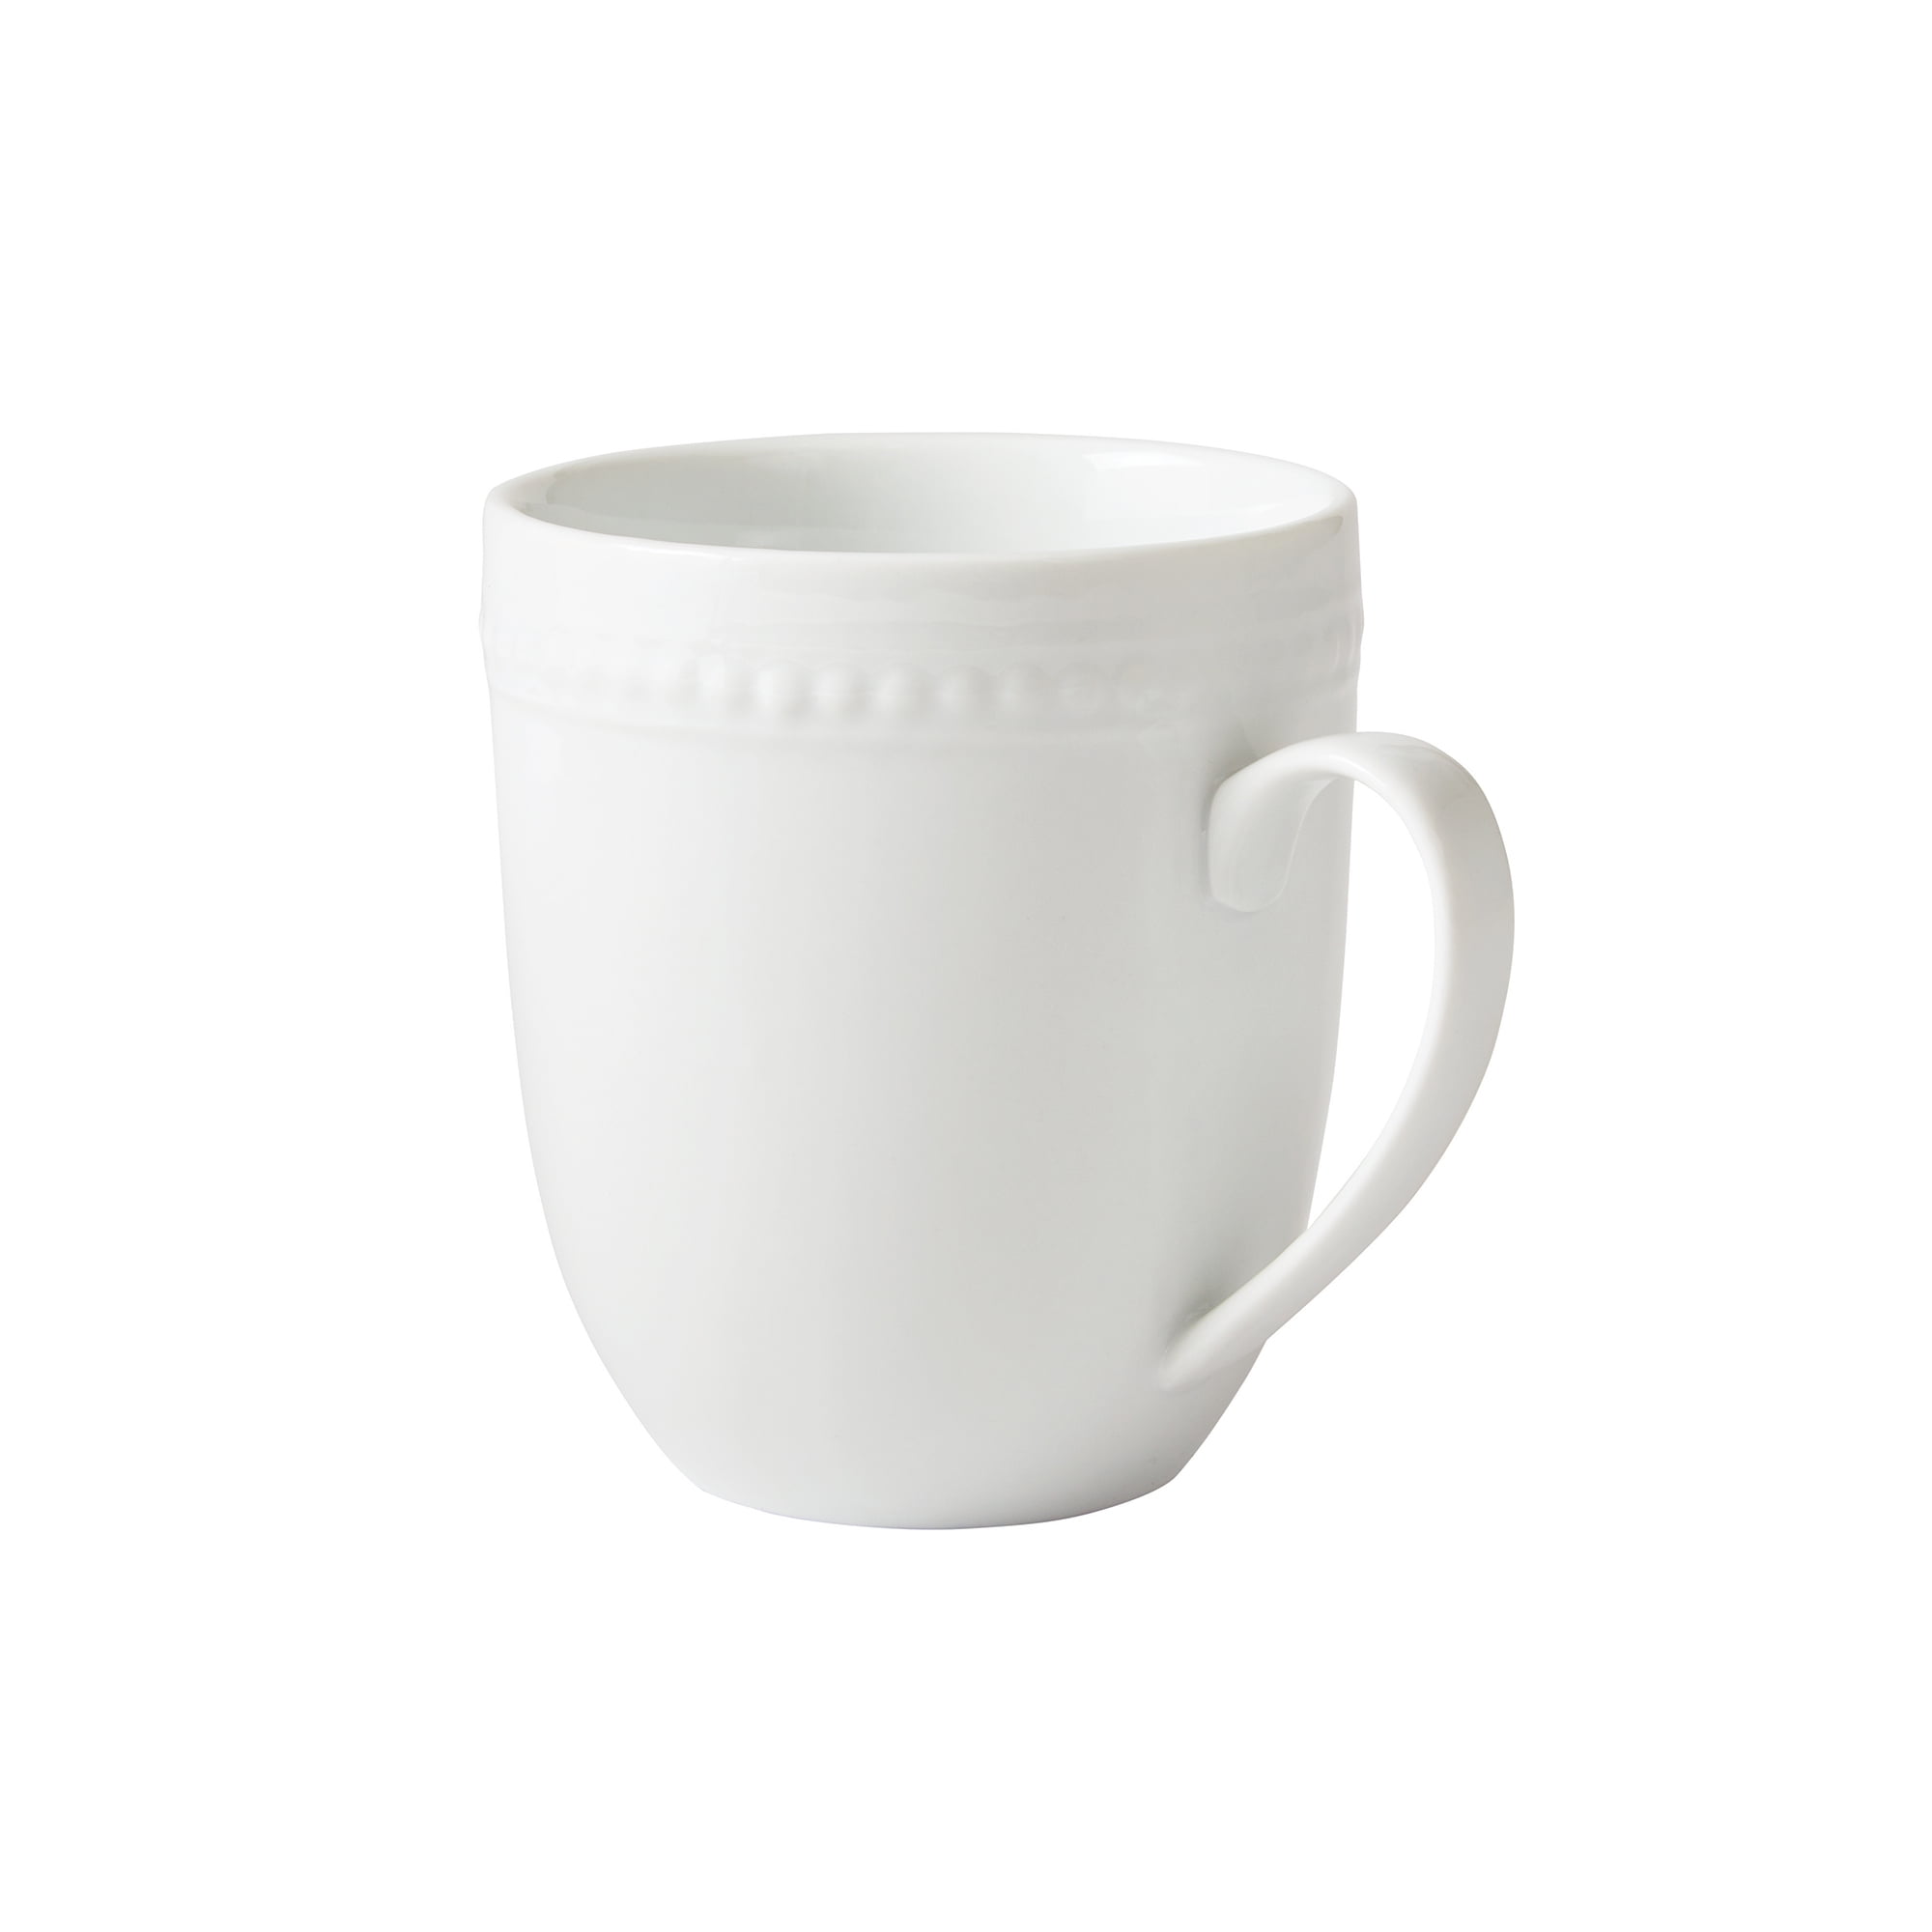 16 oz White Porcelain Tall Latte Mugs with Handles | Plum Grove